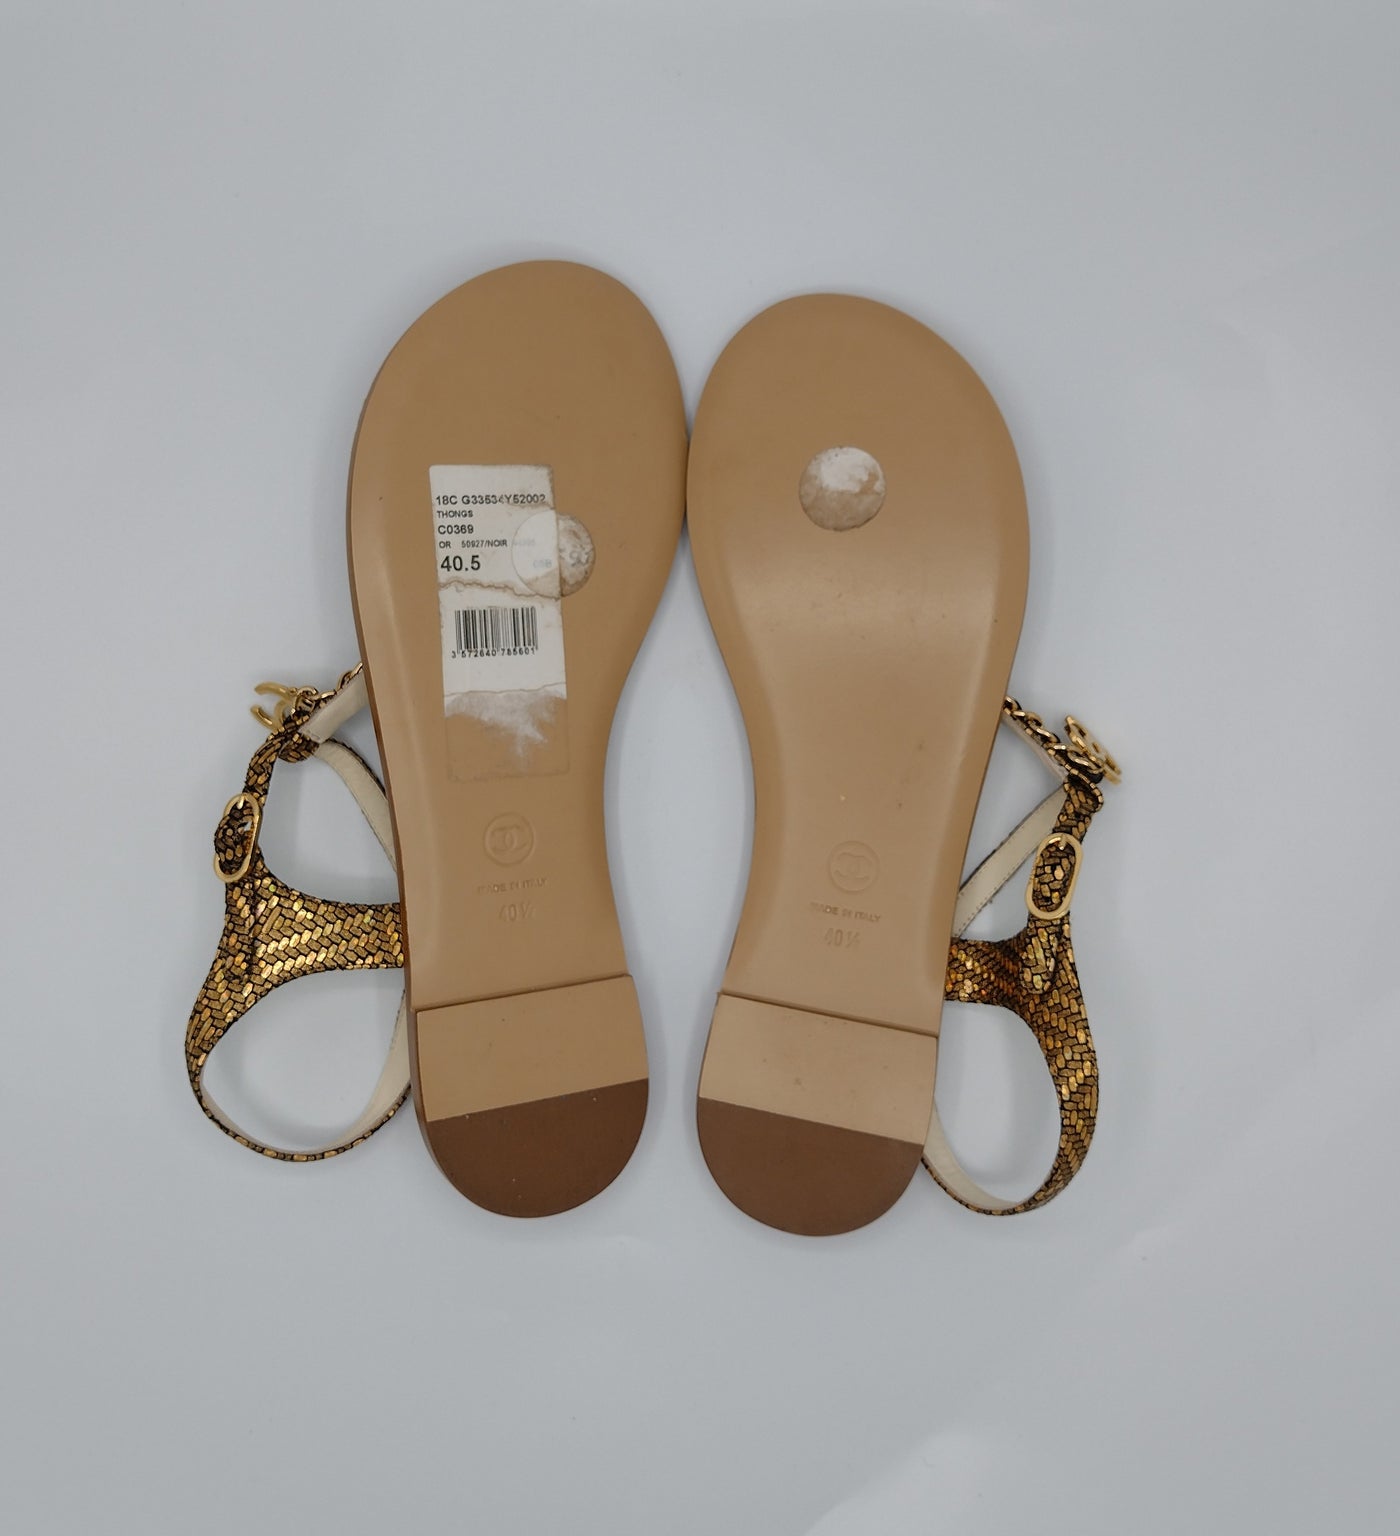 CHANEL sandals cc gold interlock chain and velvet size 40.5 never worn